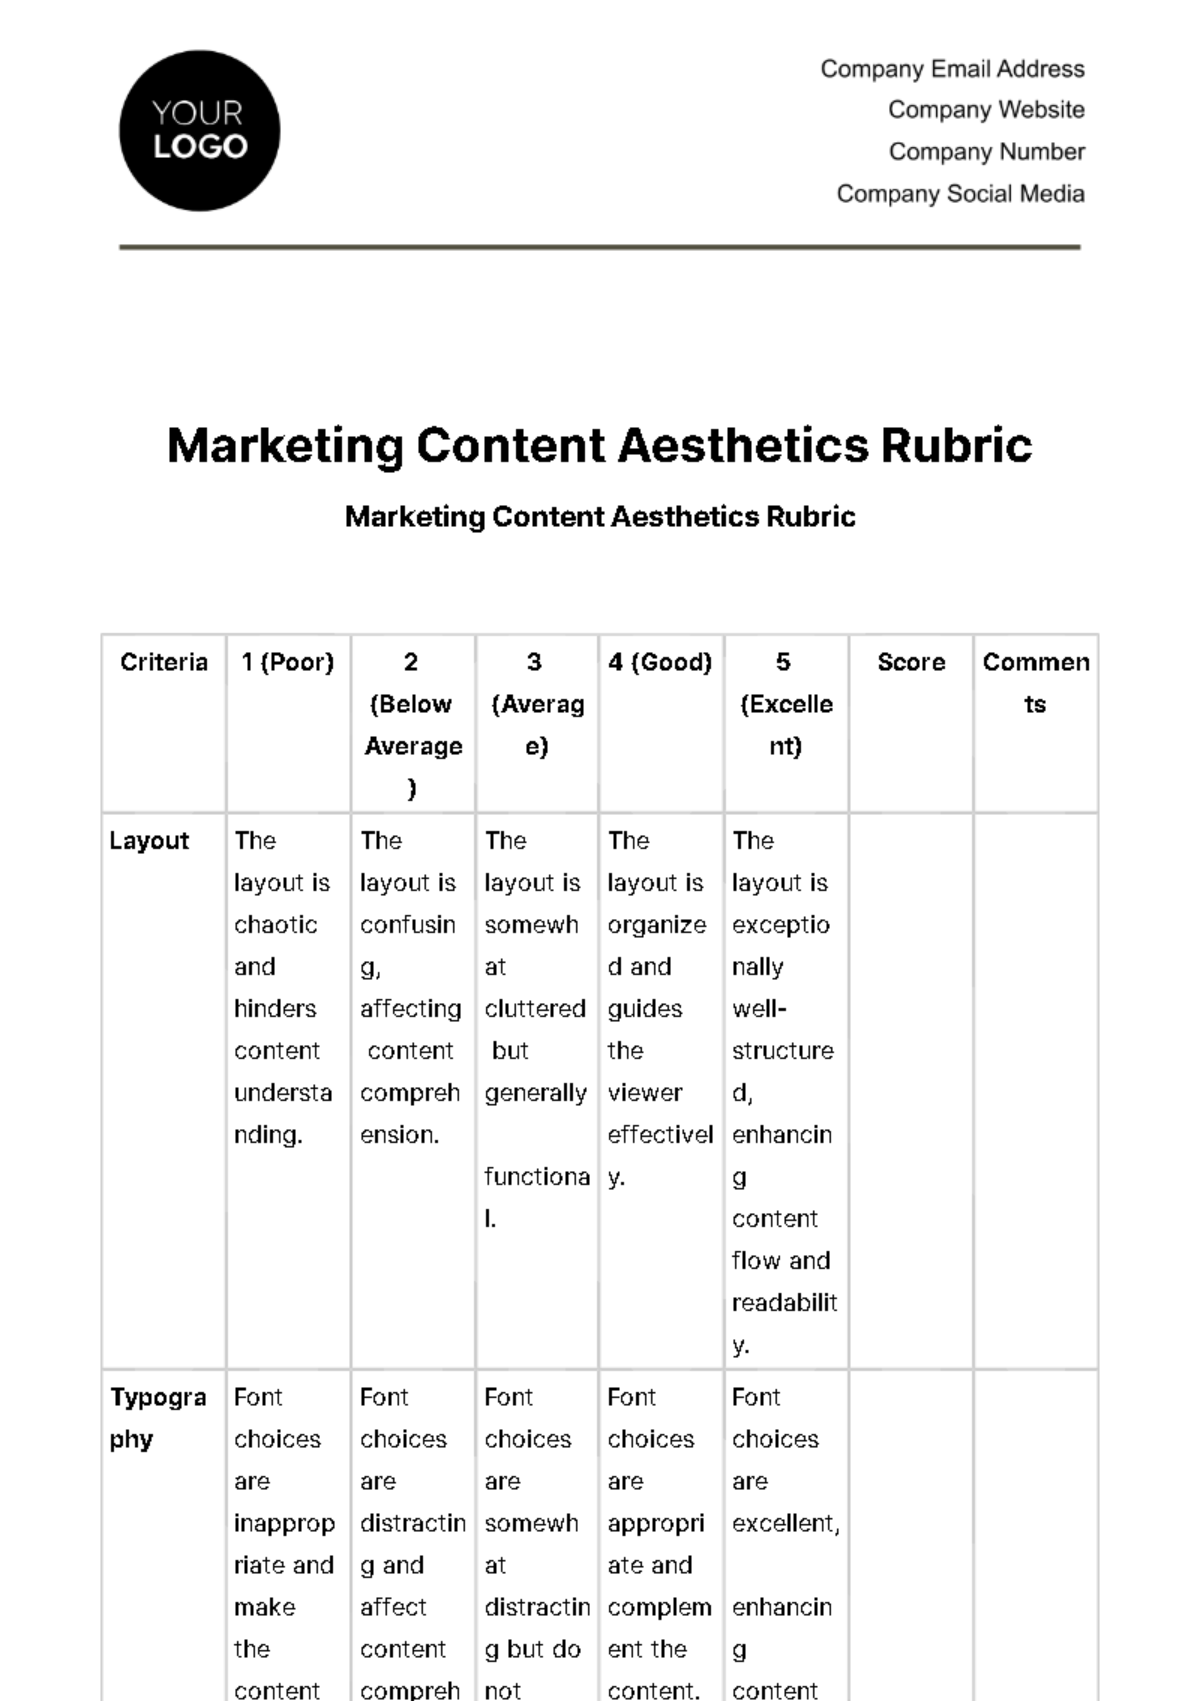 Marketing Content Aesthetics Rubric Template